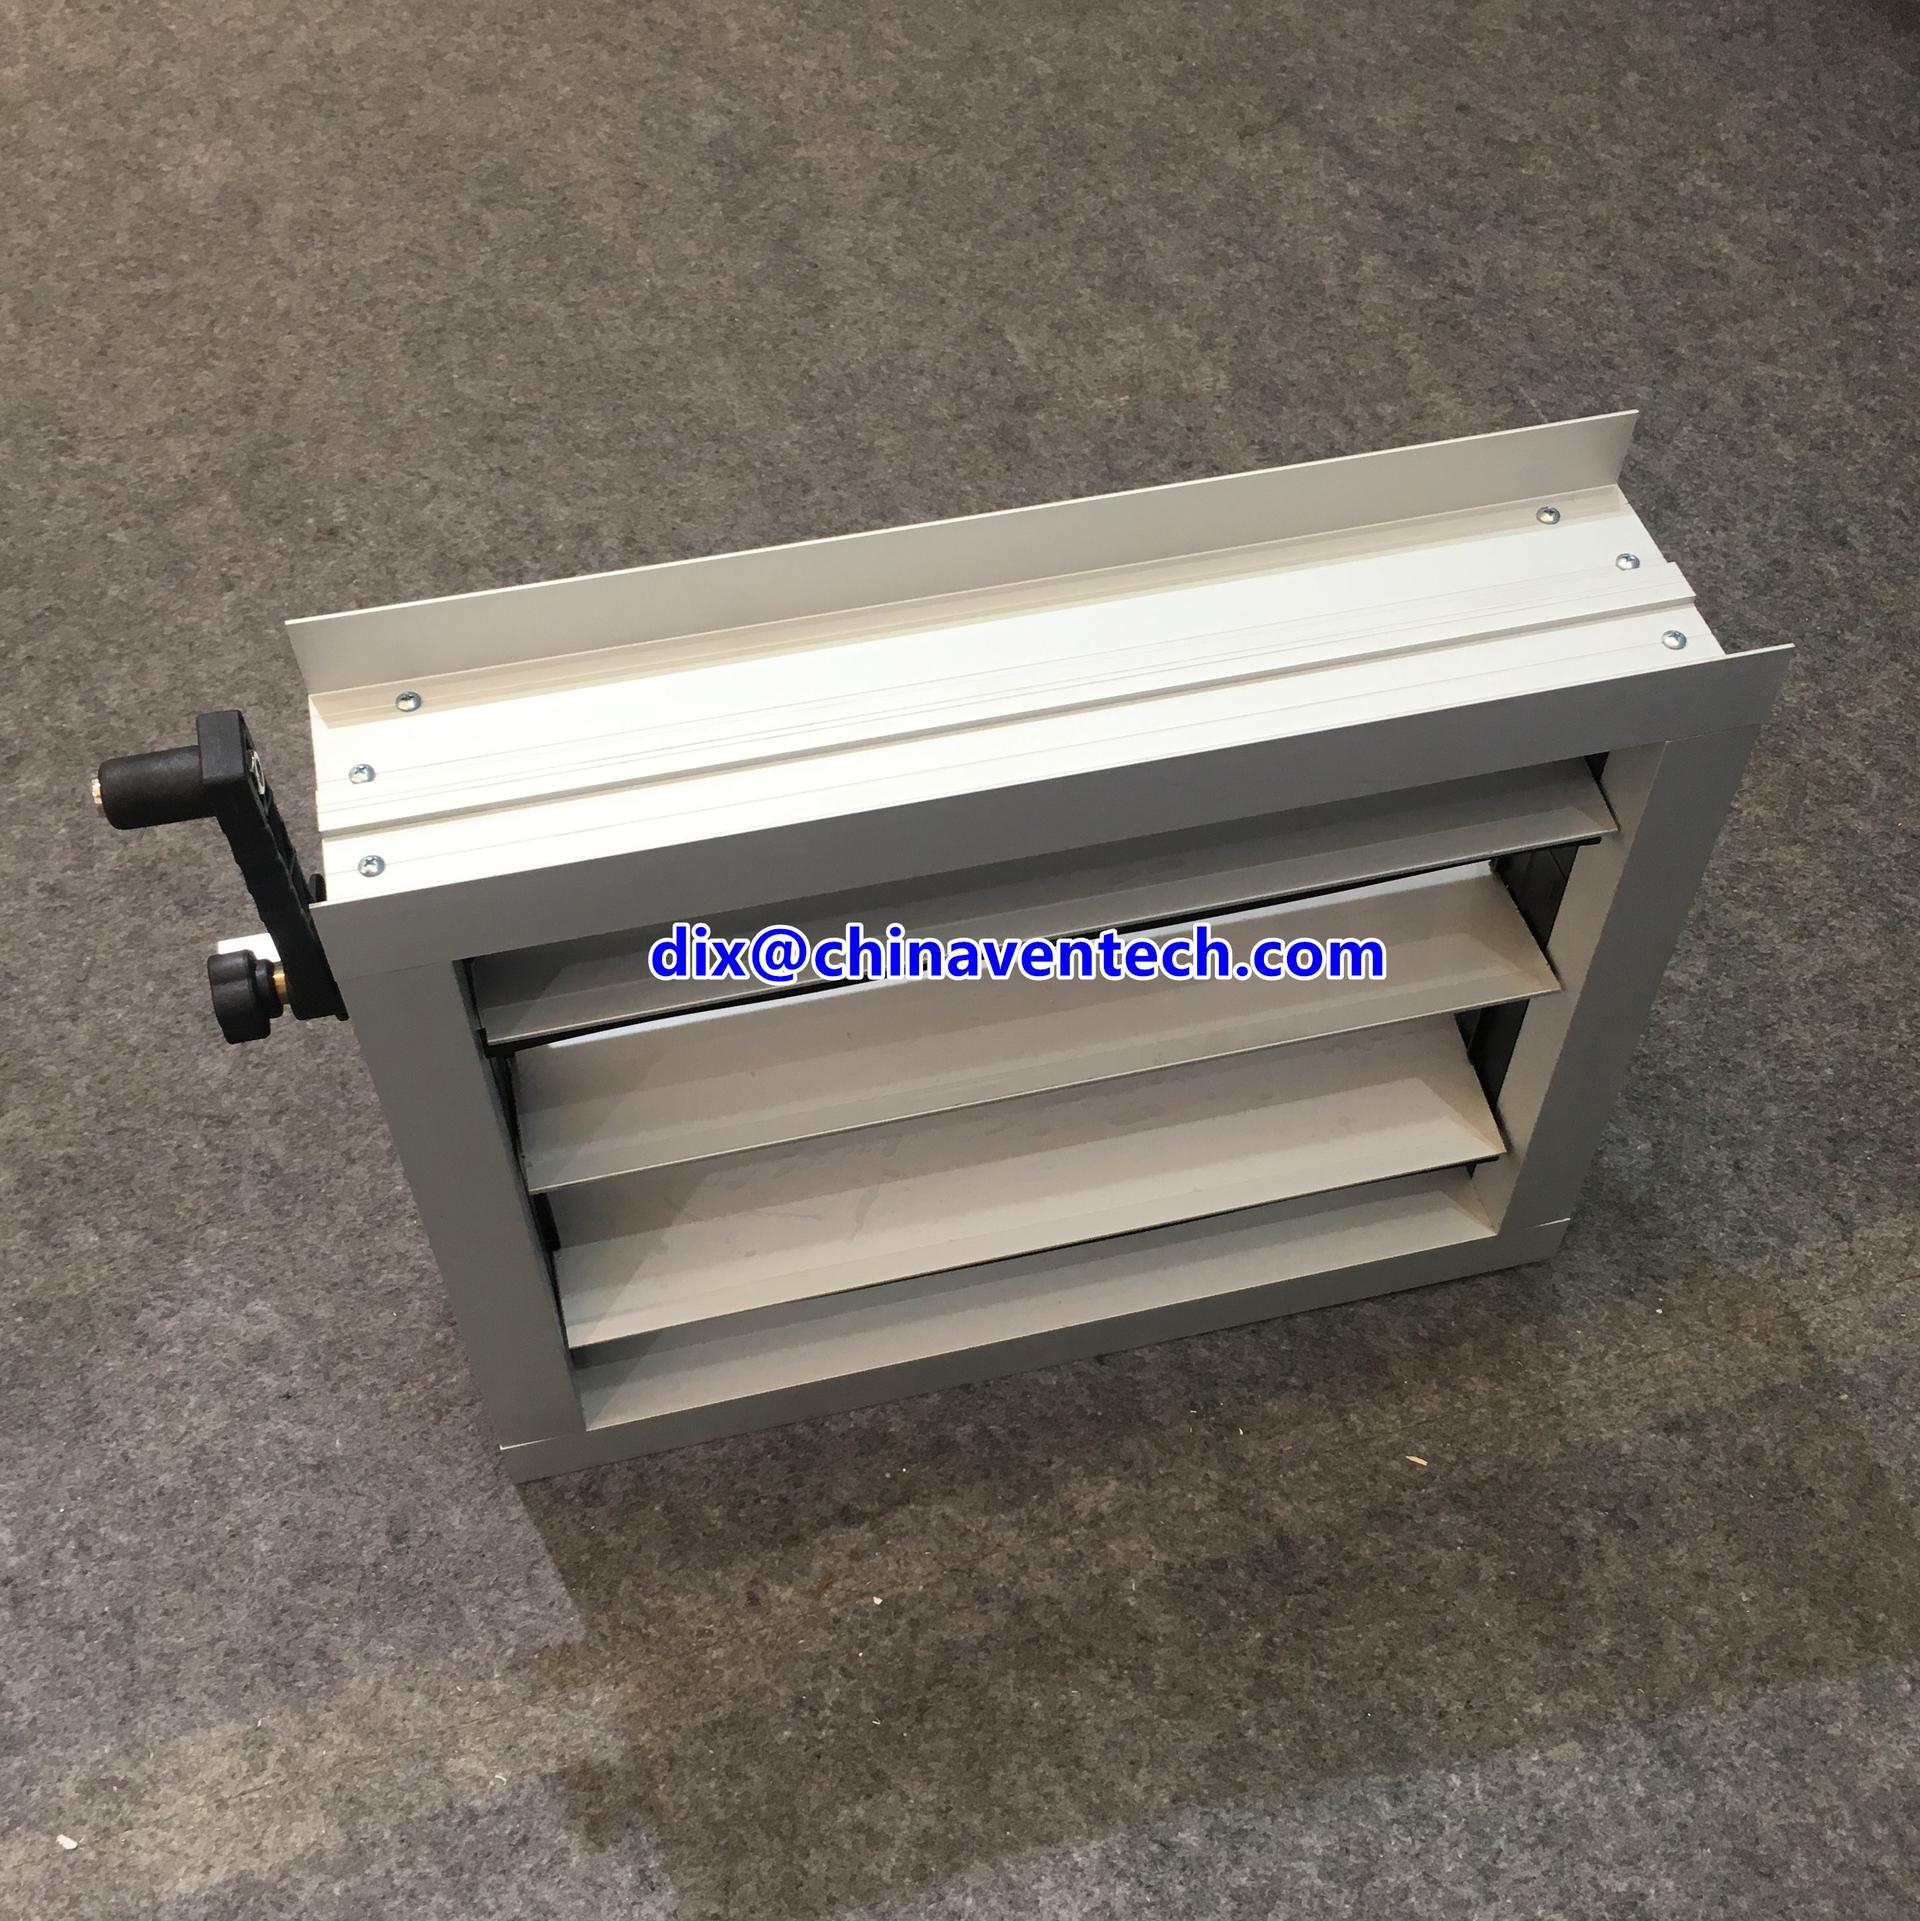 HVAC Air Conditioning Shutter Air Flow Opposed Blades Volume Control Damper